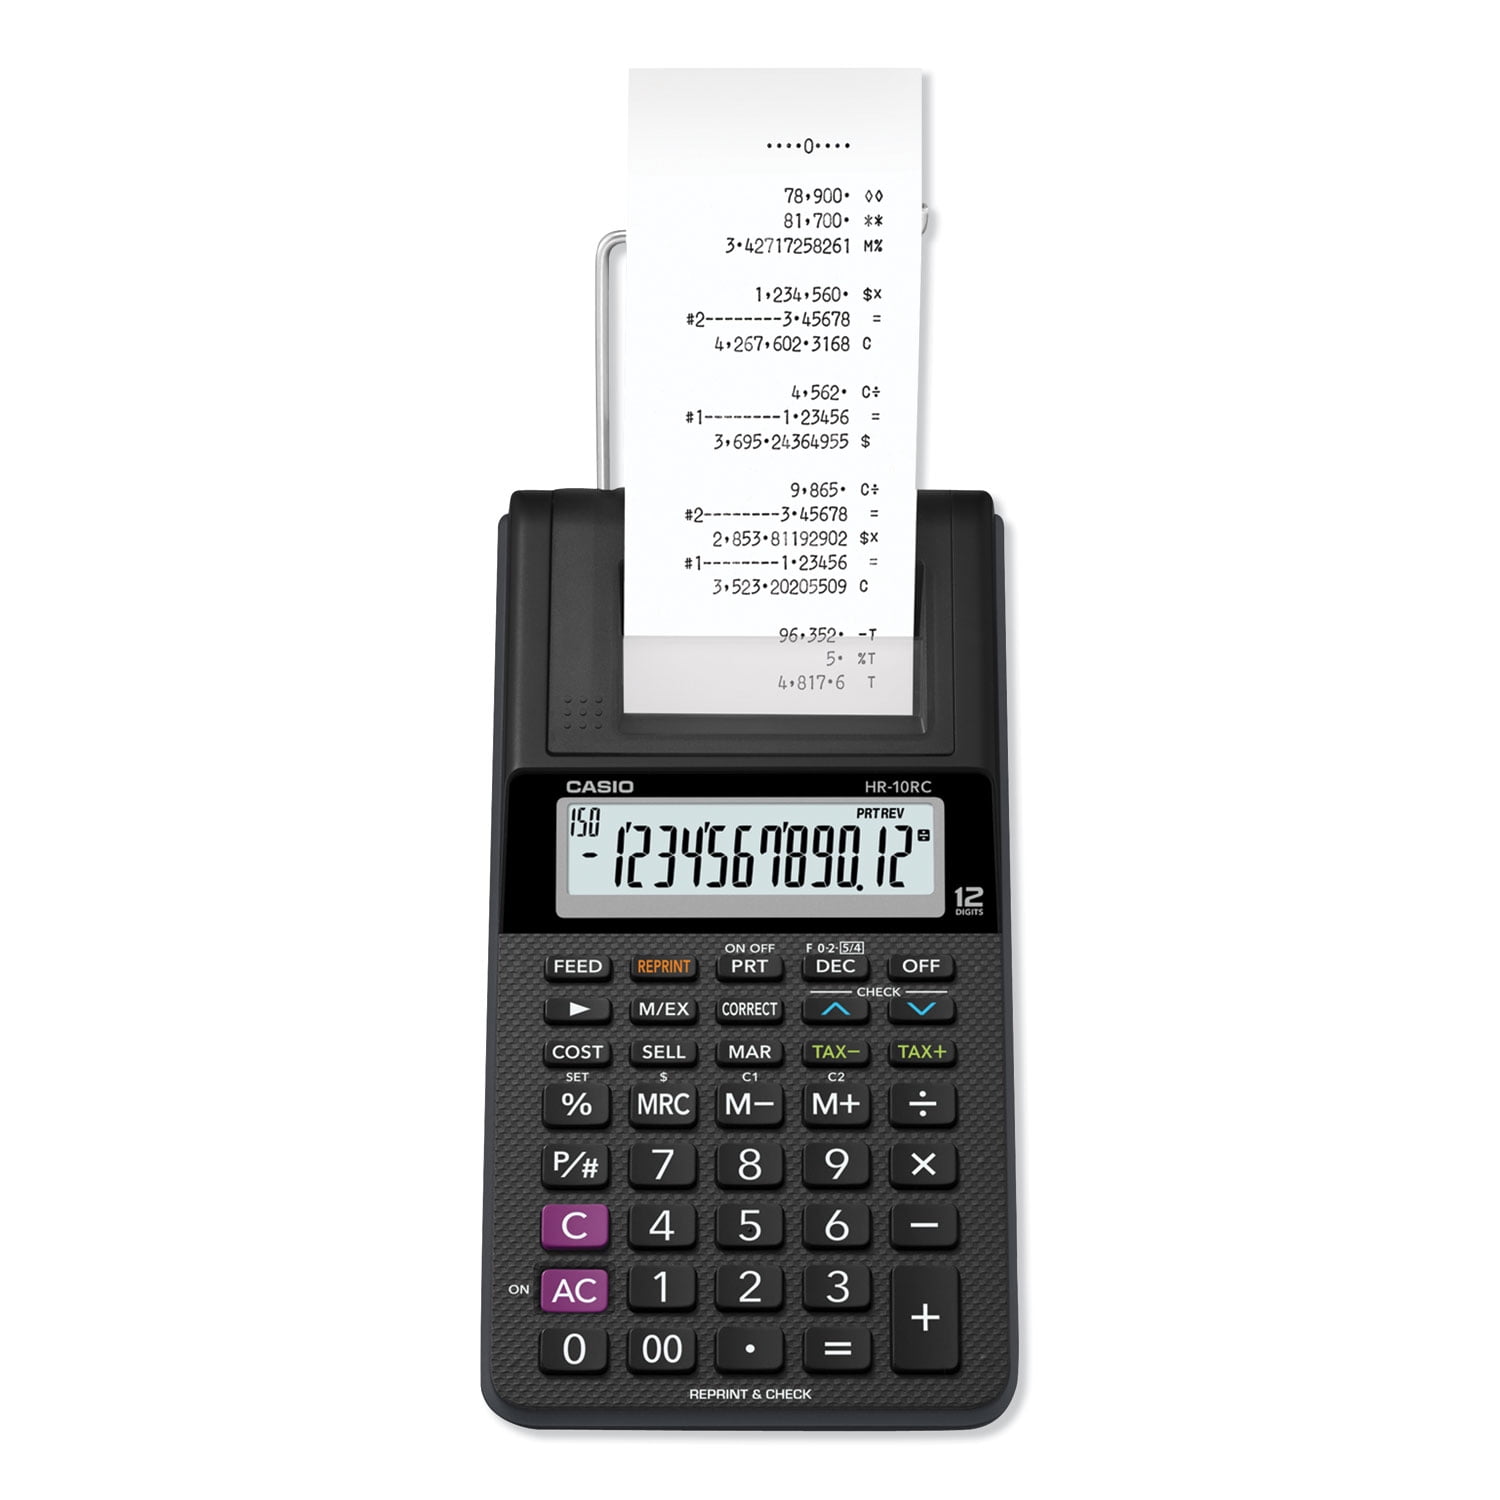 Casio HR-8TM Printing Calculator for sale online 